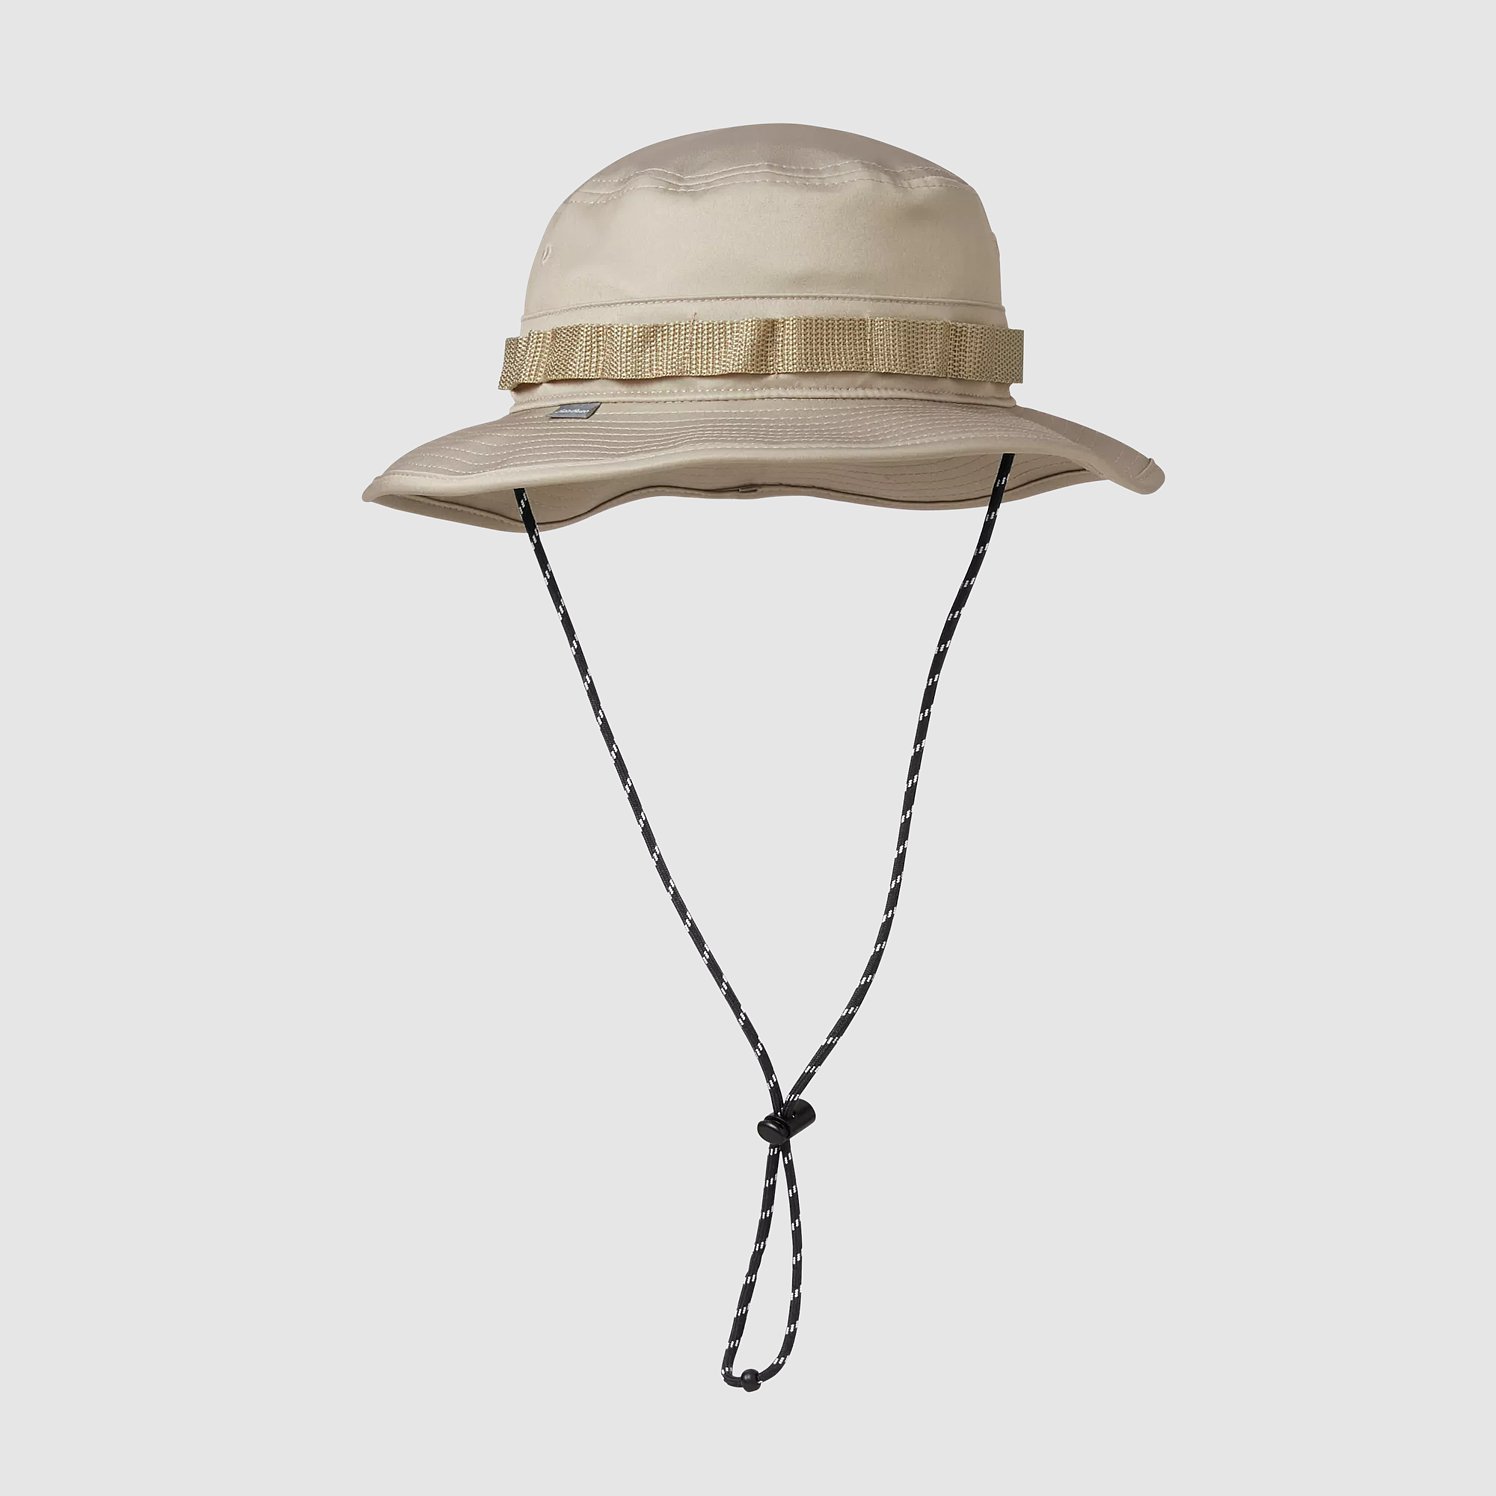 Eddie Bauer Men's Exploration UPF Bucket Hat - Light Khaki - Size L/XL